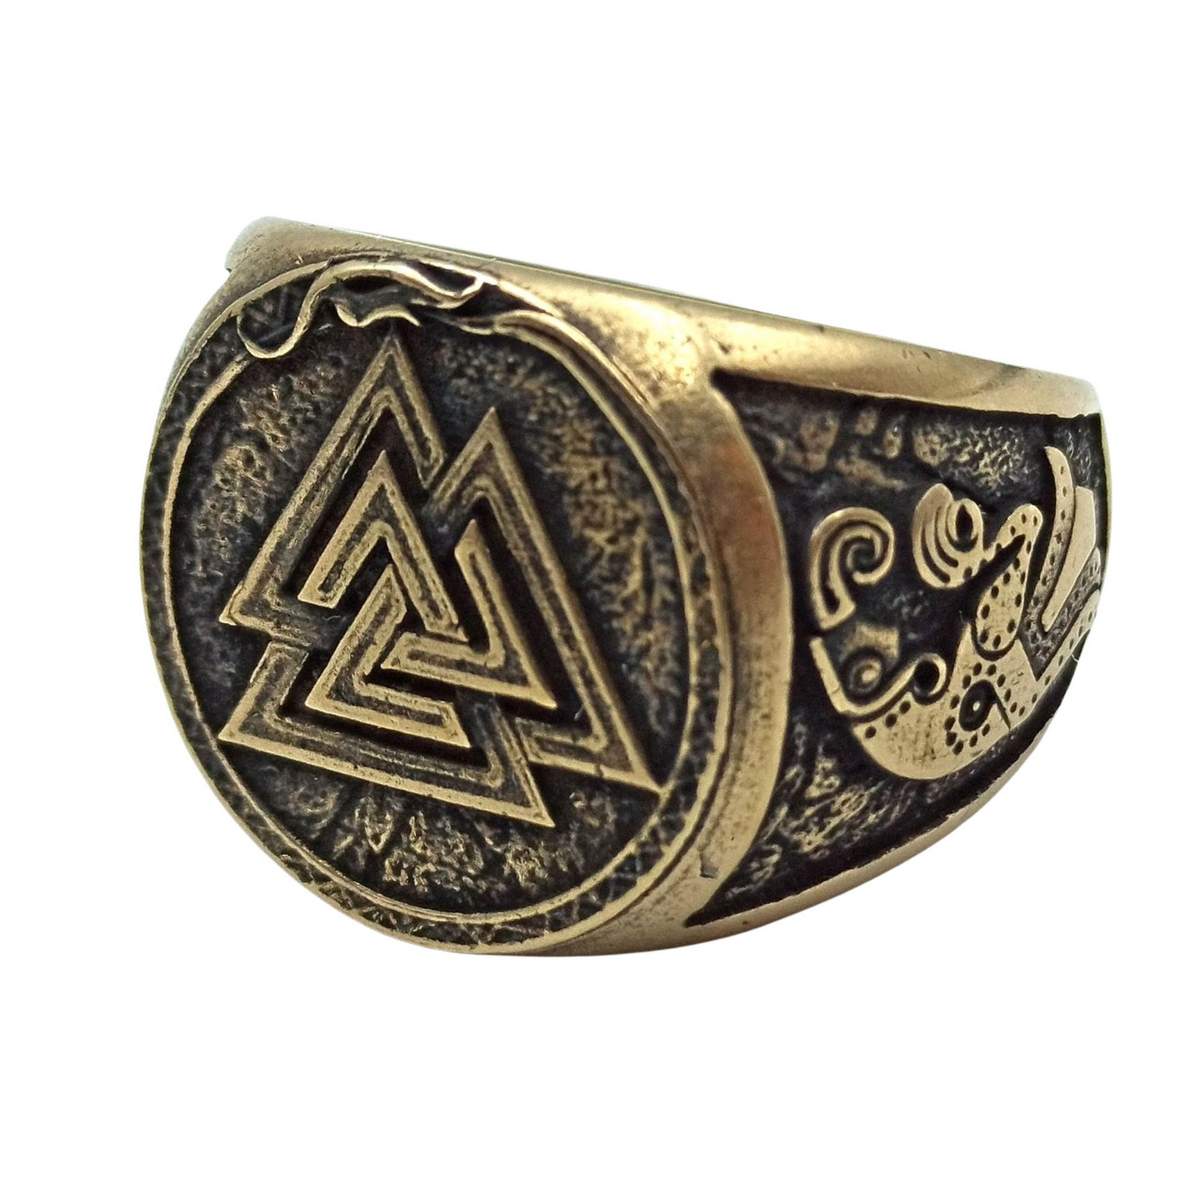 Valknut Symbol germanic raven bronze ring